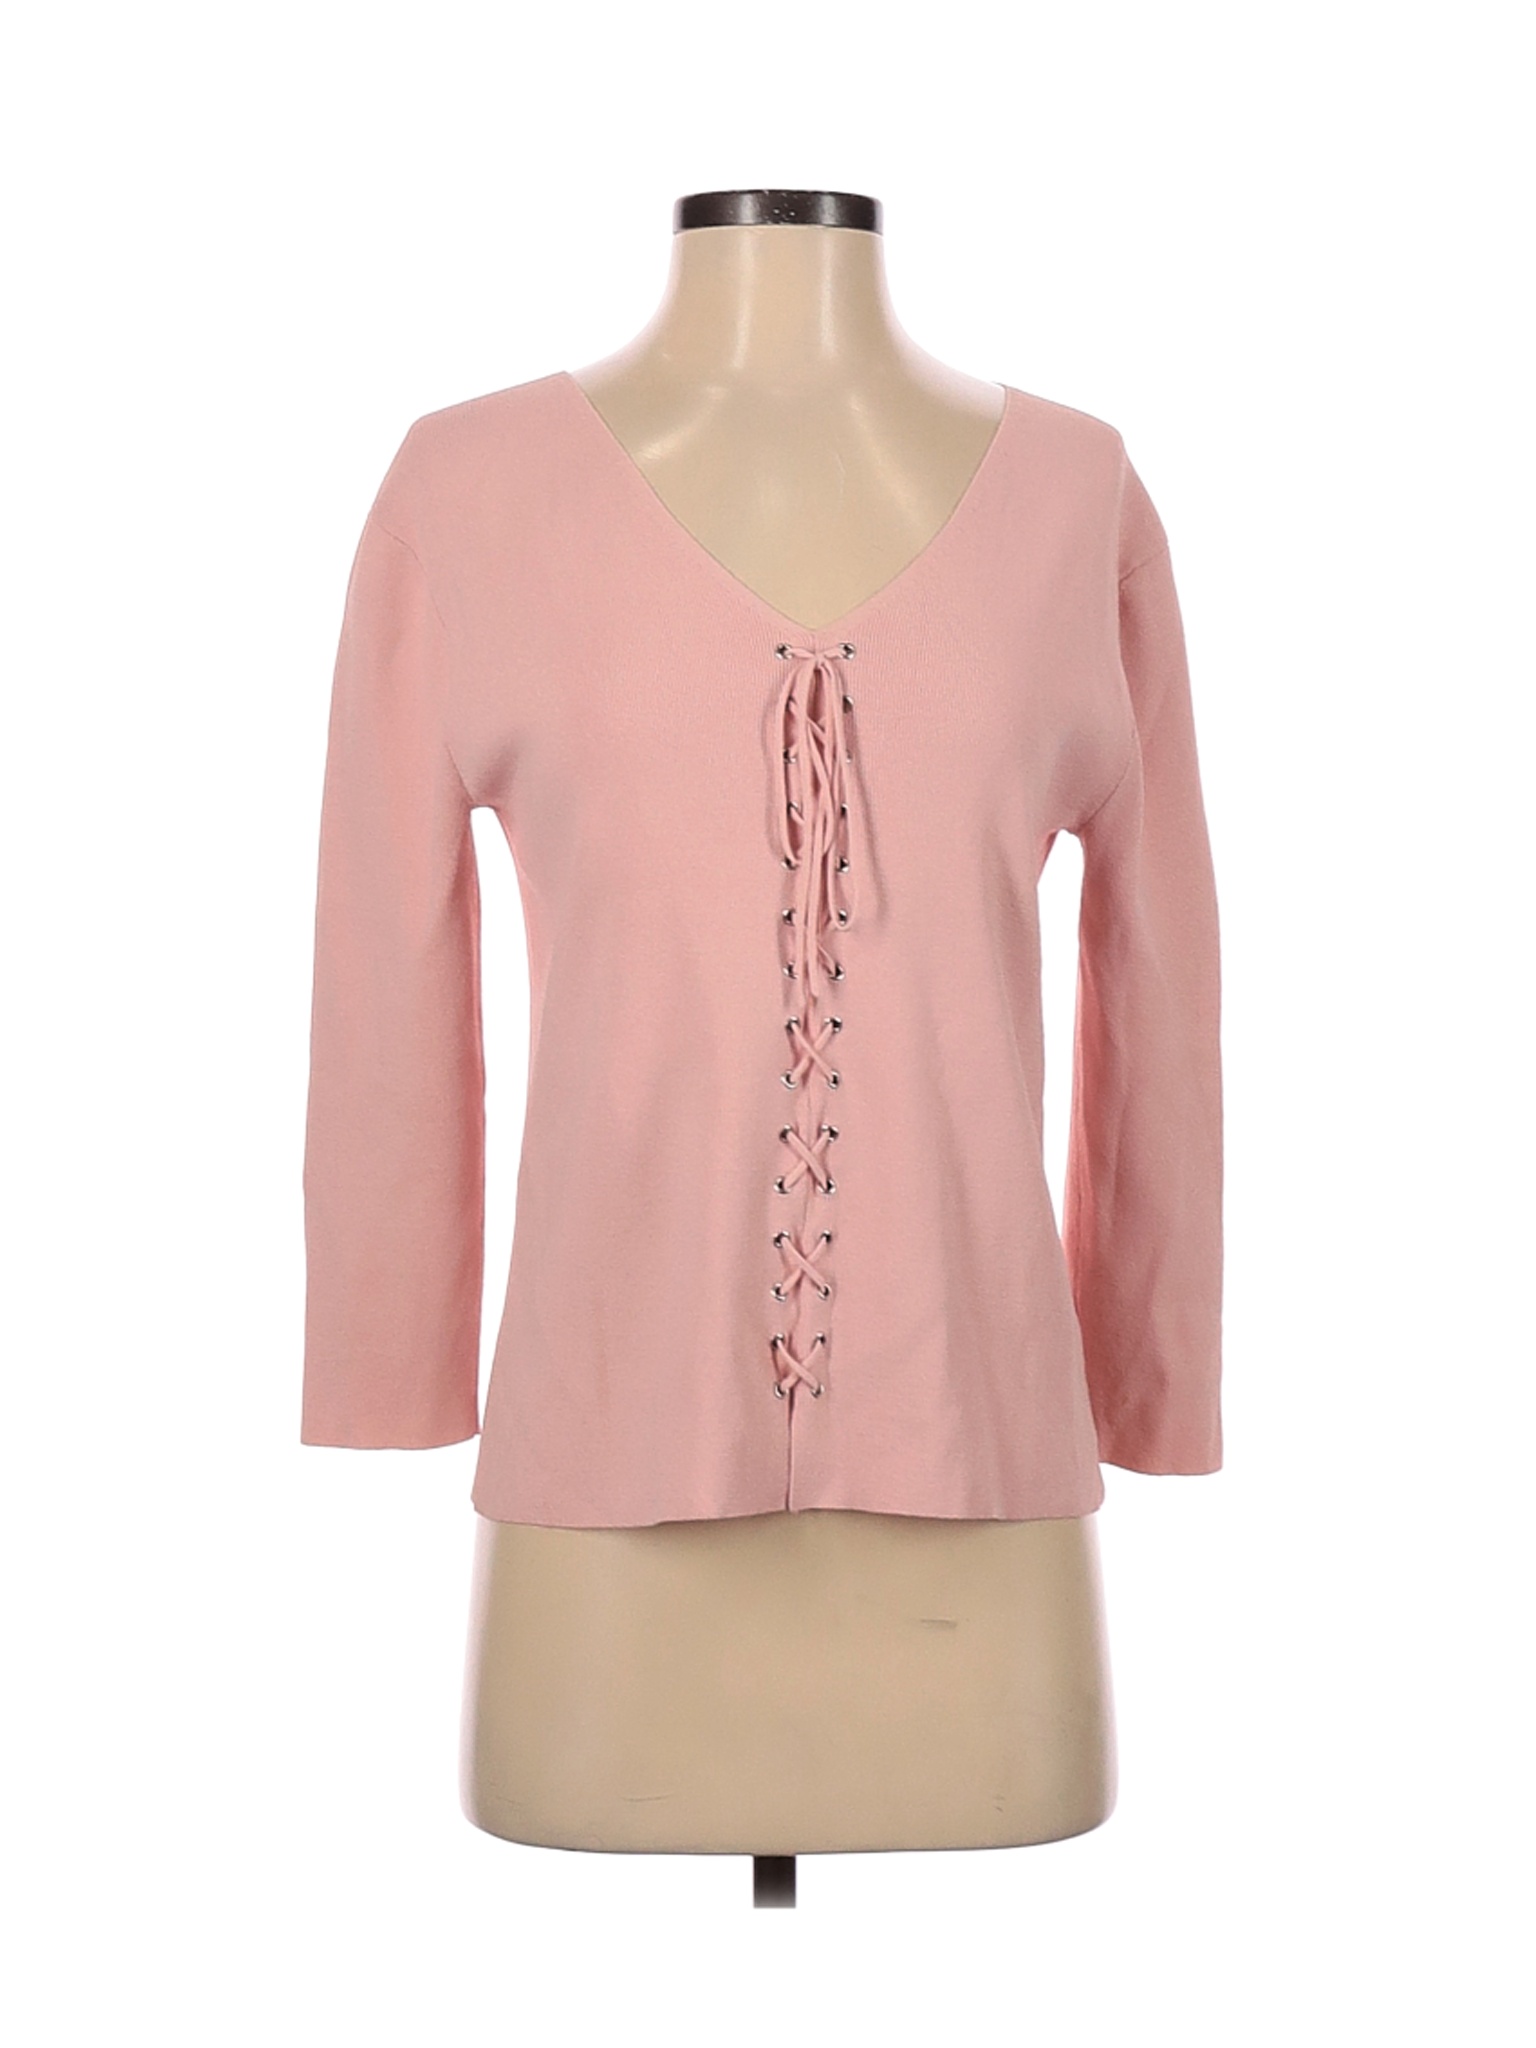 Chico's Design Women Pink Pullover Sweater S | eBay